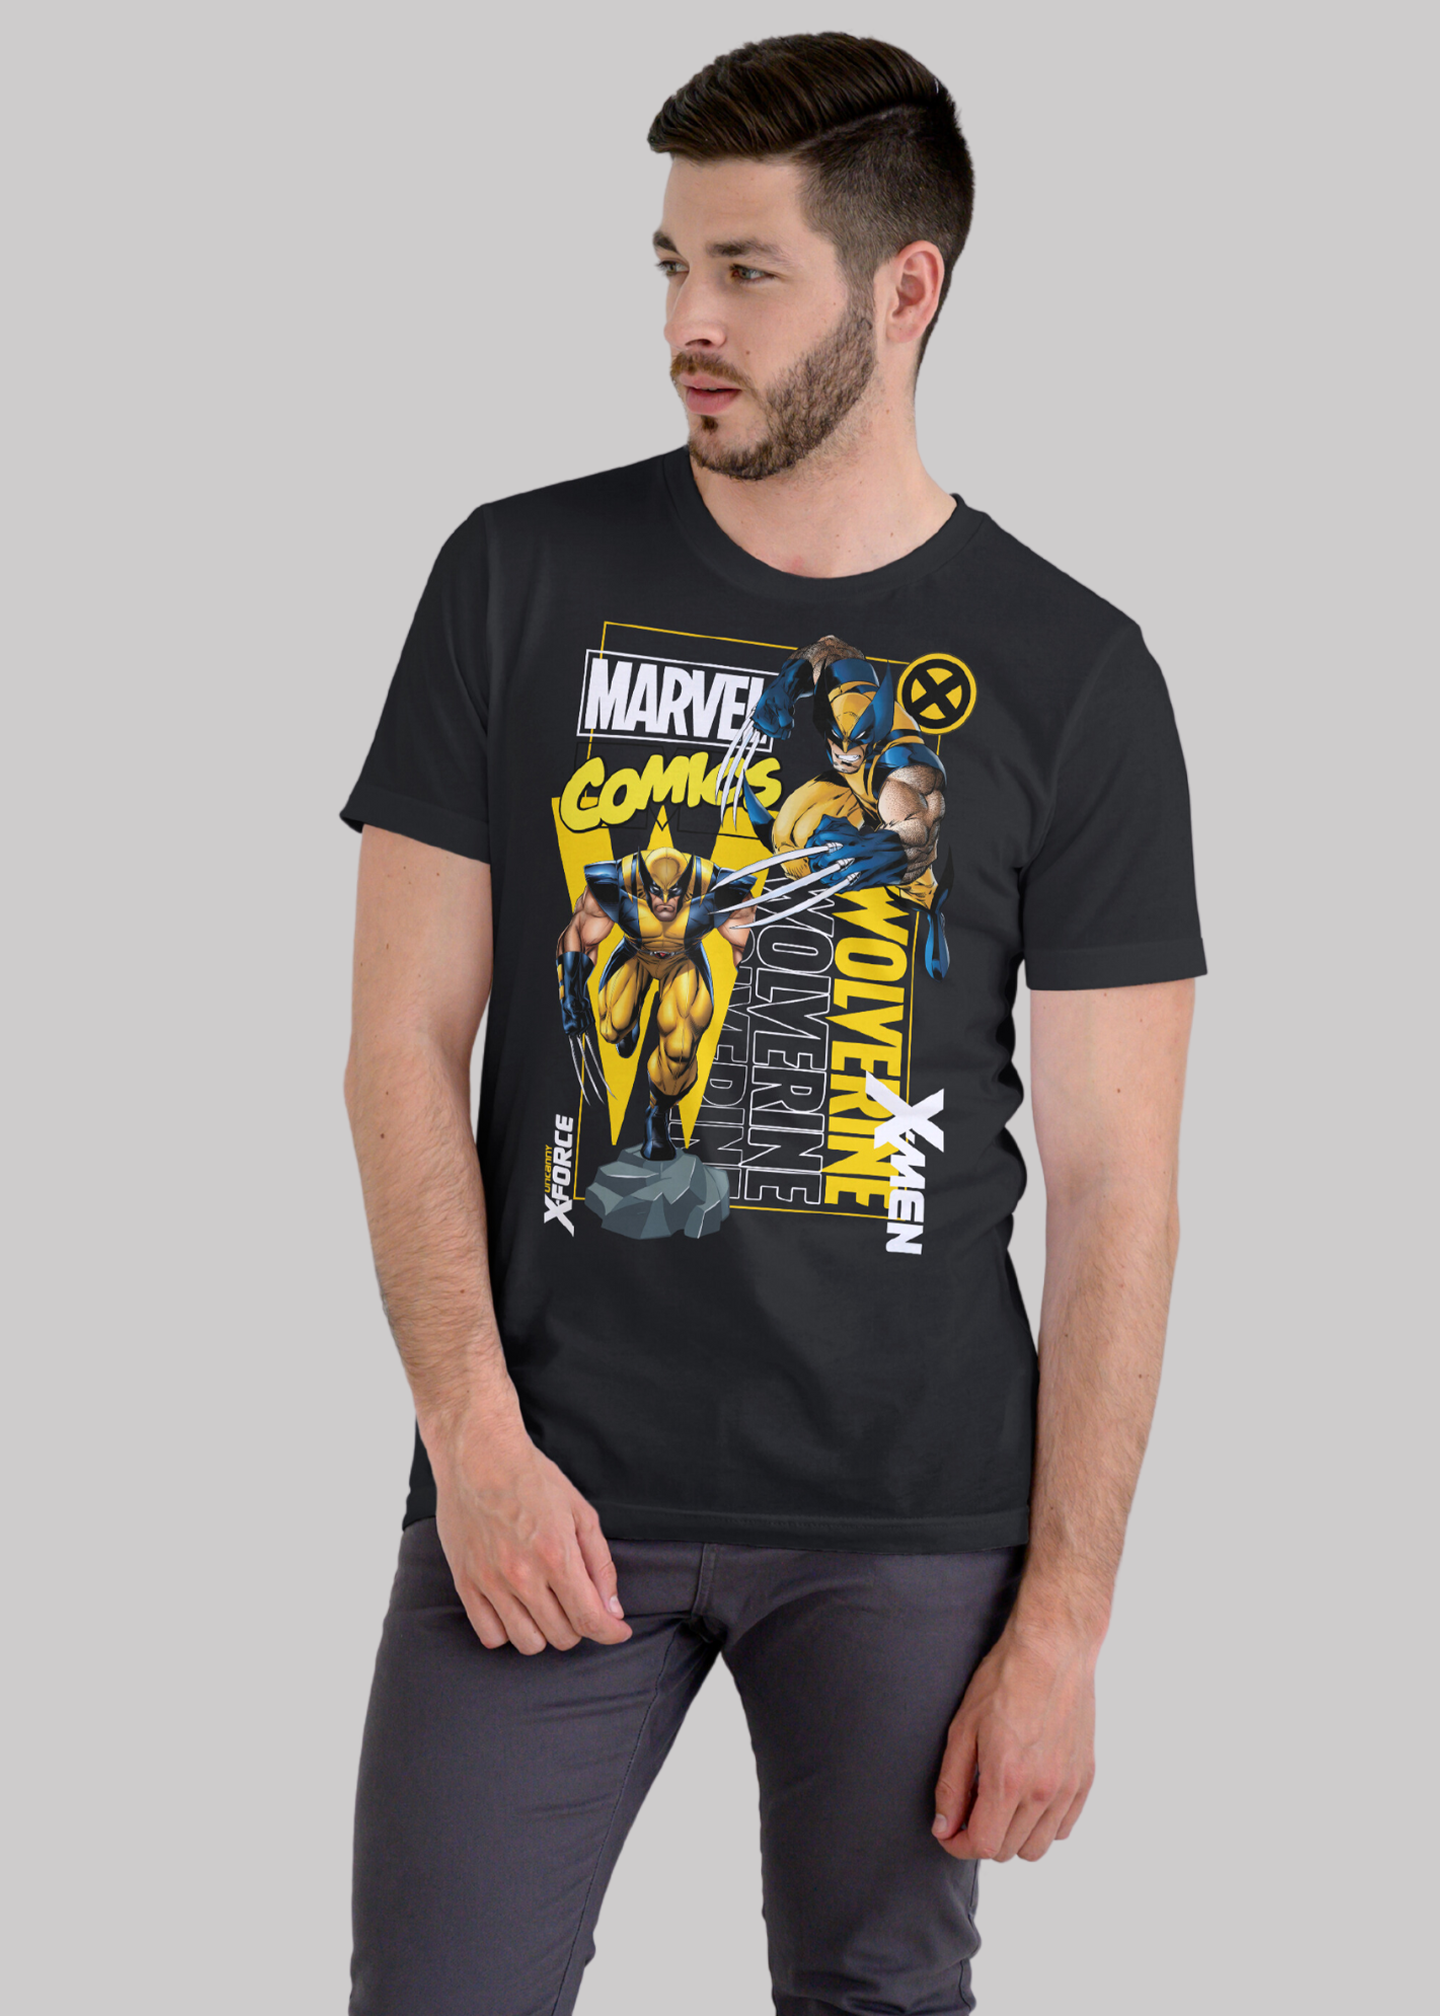 Wolverine Printed Half Sleeve Premium Cotton T-shirt For Men